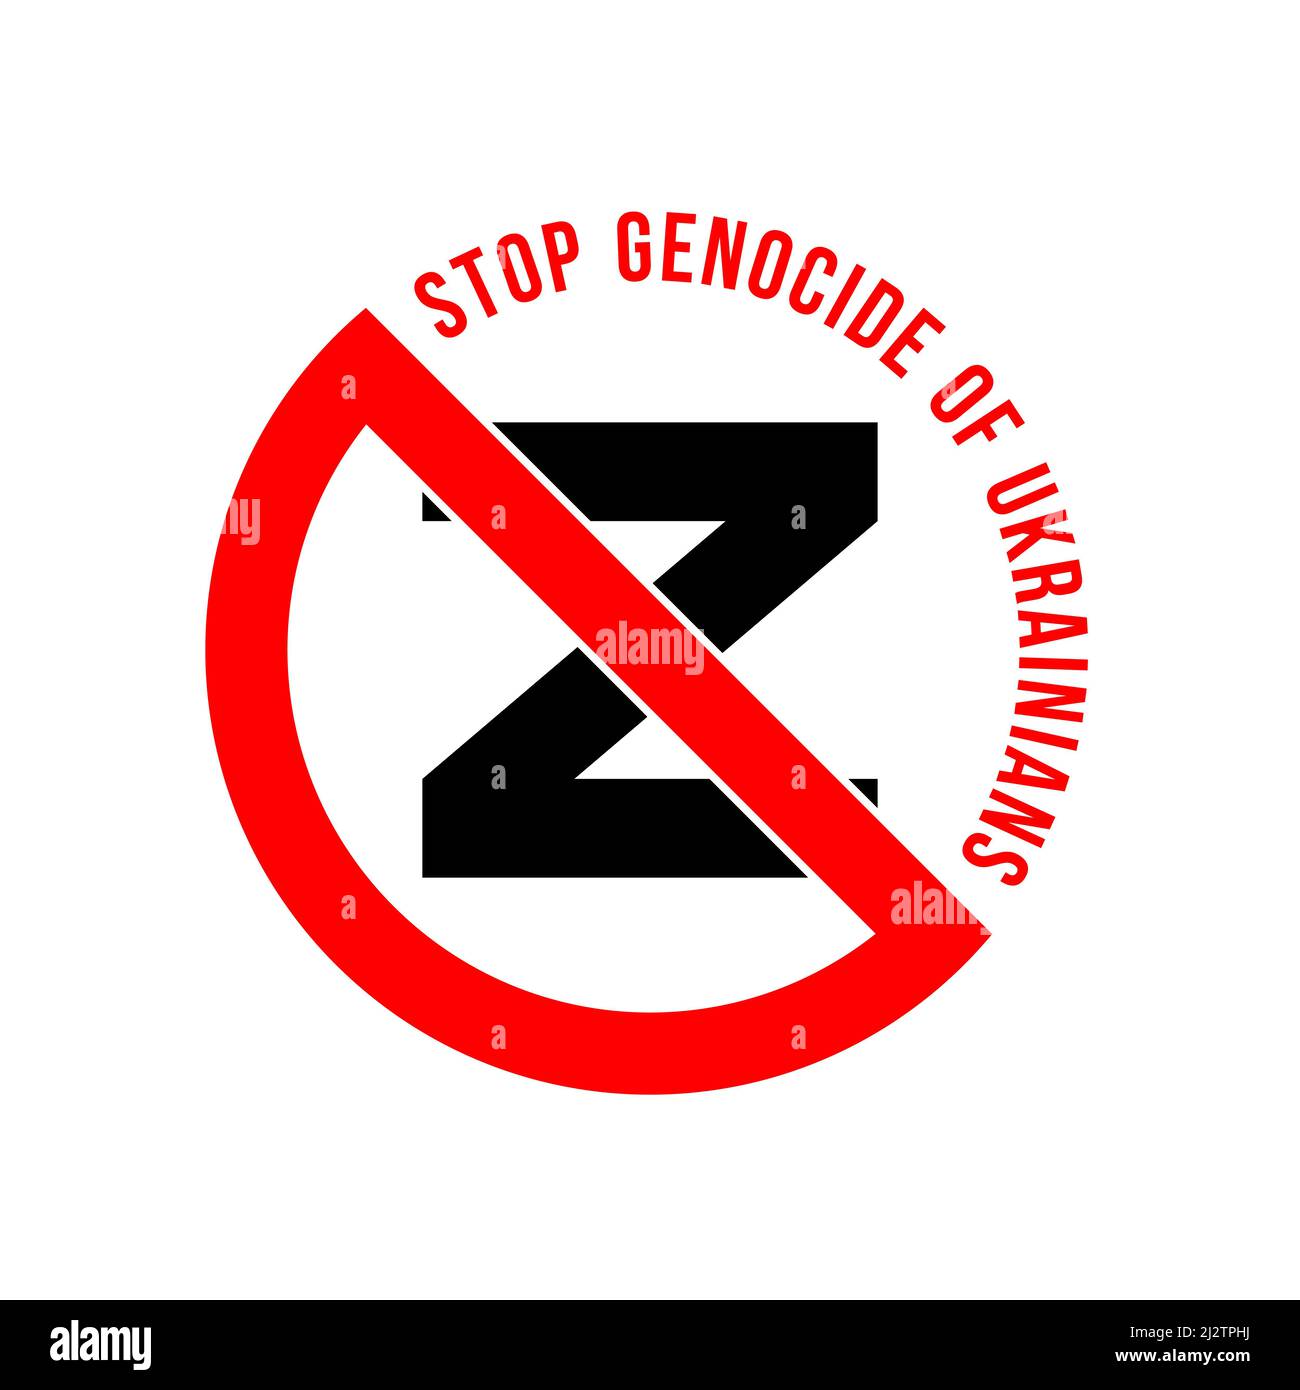 Stop genocide of Ukrainians. Z symbol inside prohibition sign Stock Vector